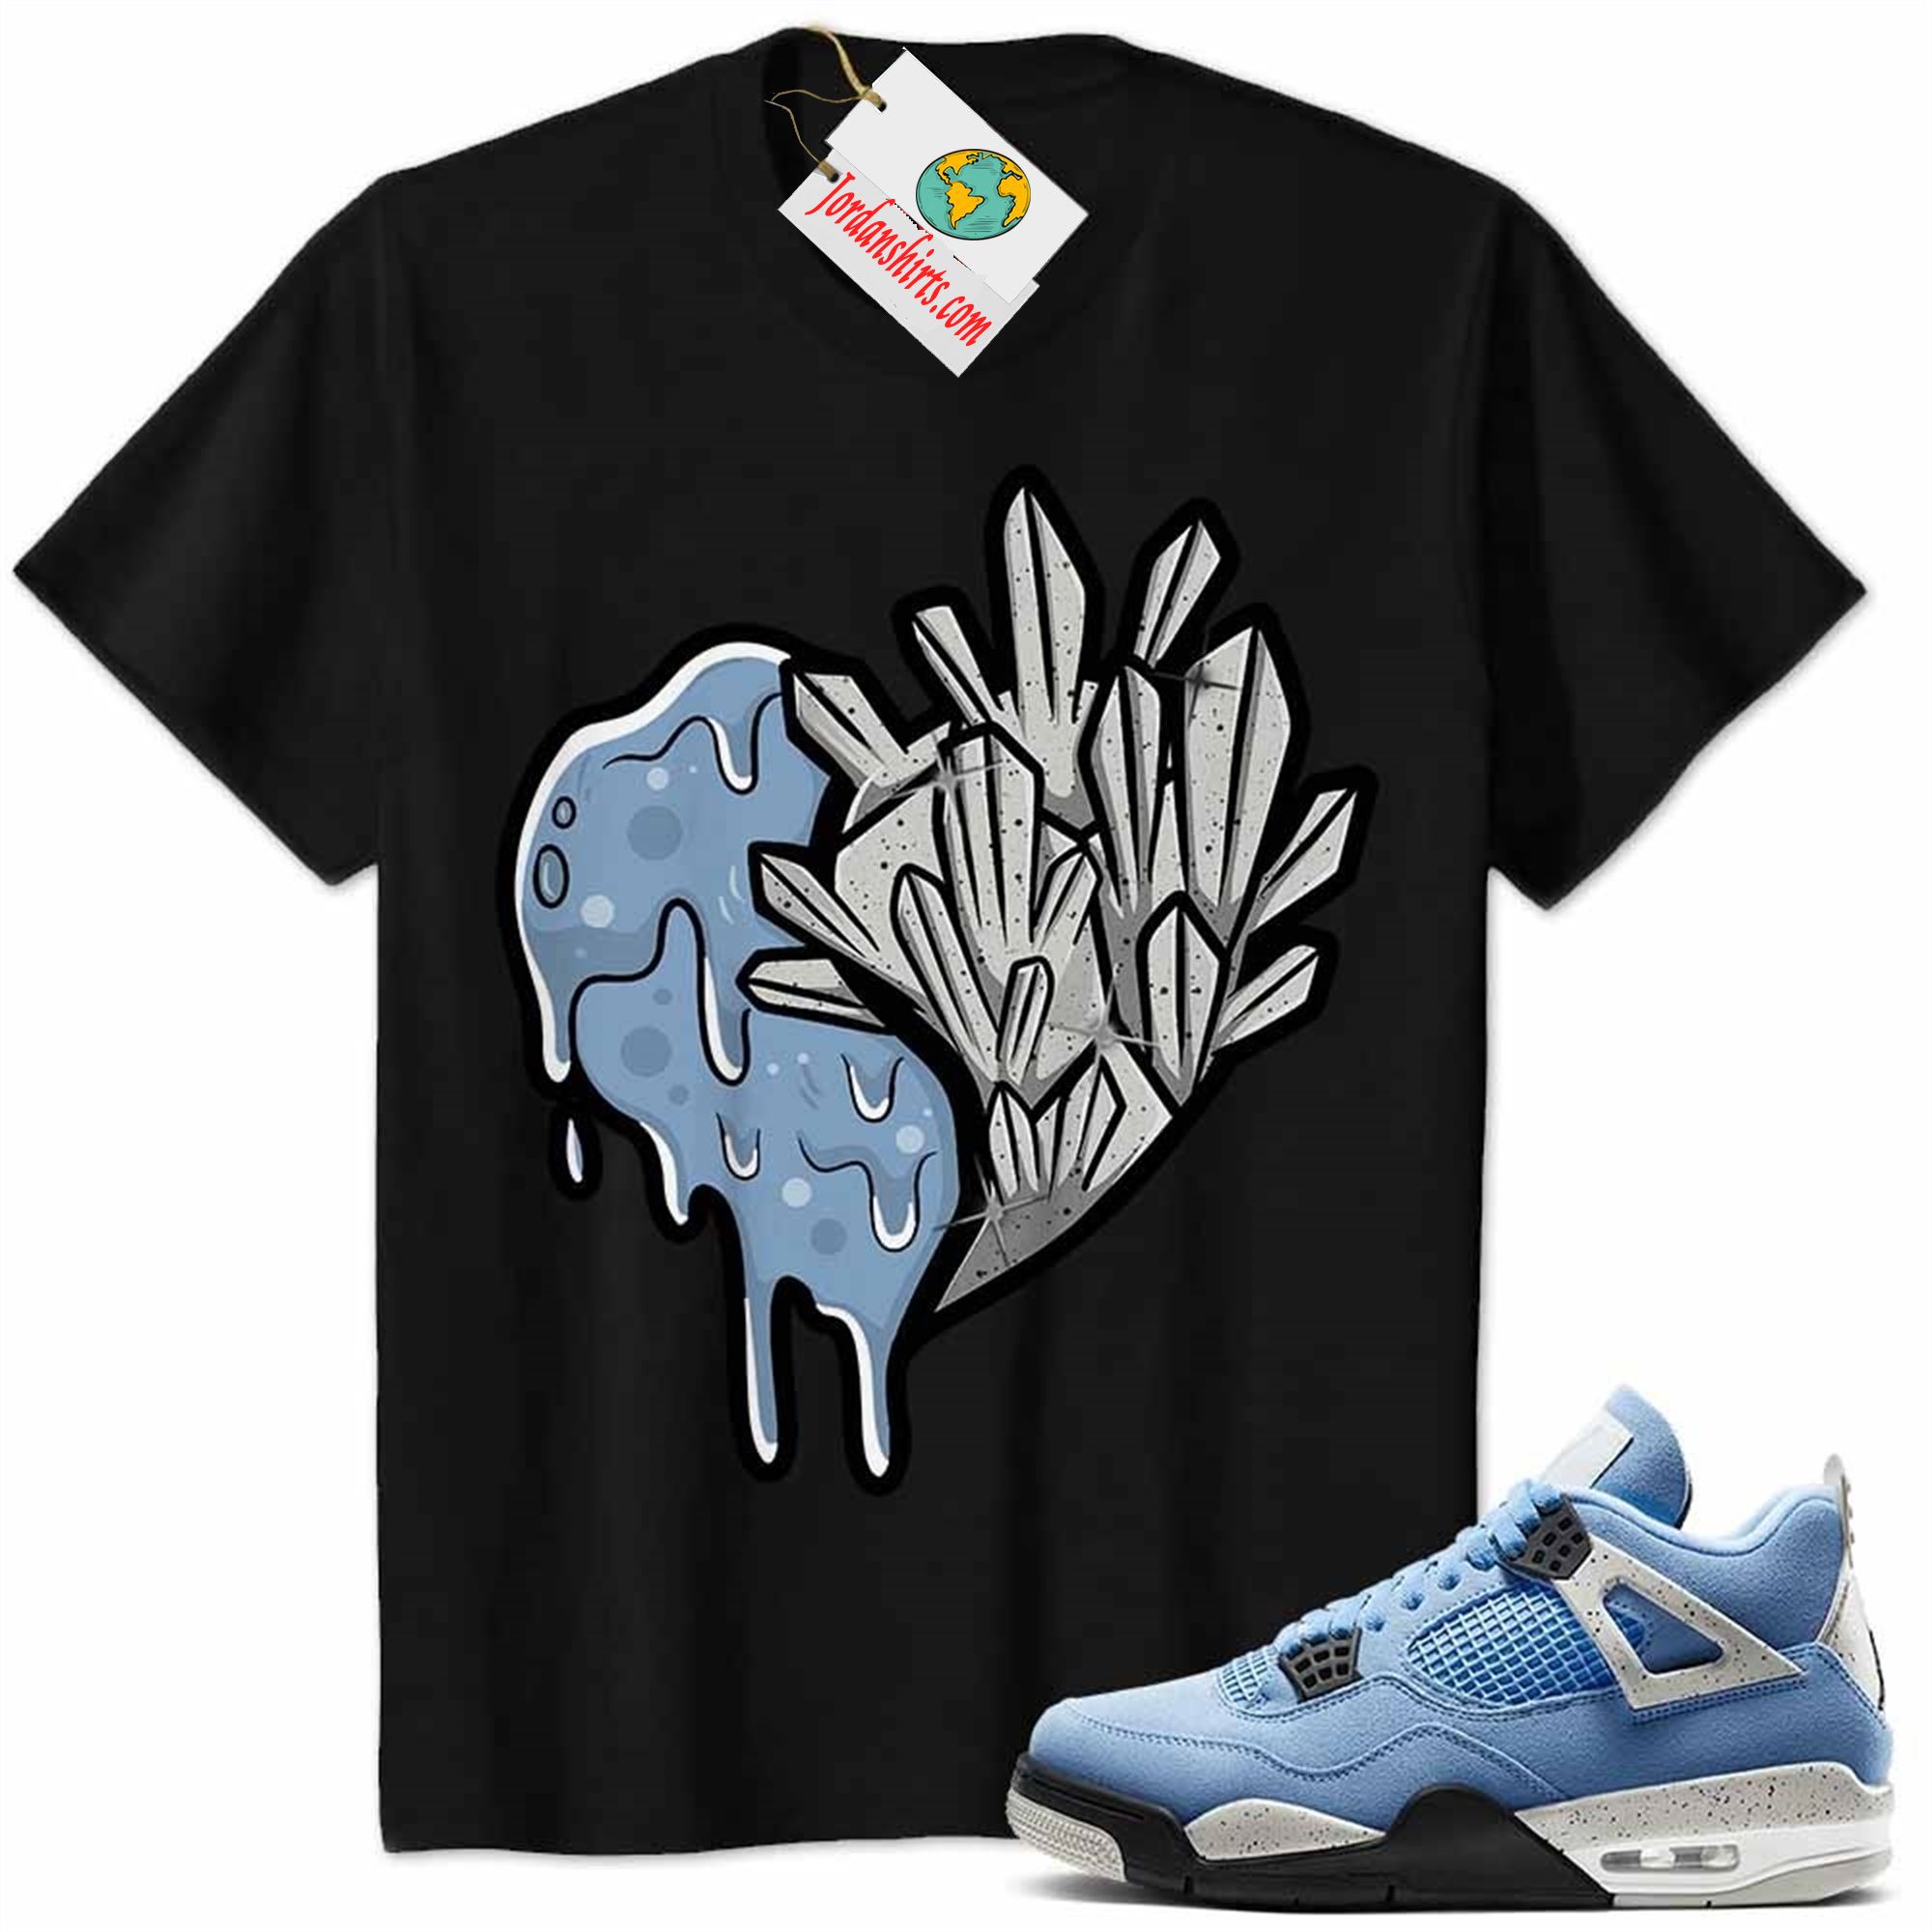 Jordan 4 Shirt, Crystal And Melt Heart Black Air Jordan 4 University Blue 4s Plus Size Up To 5xl